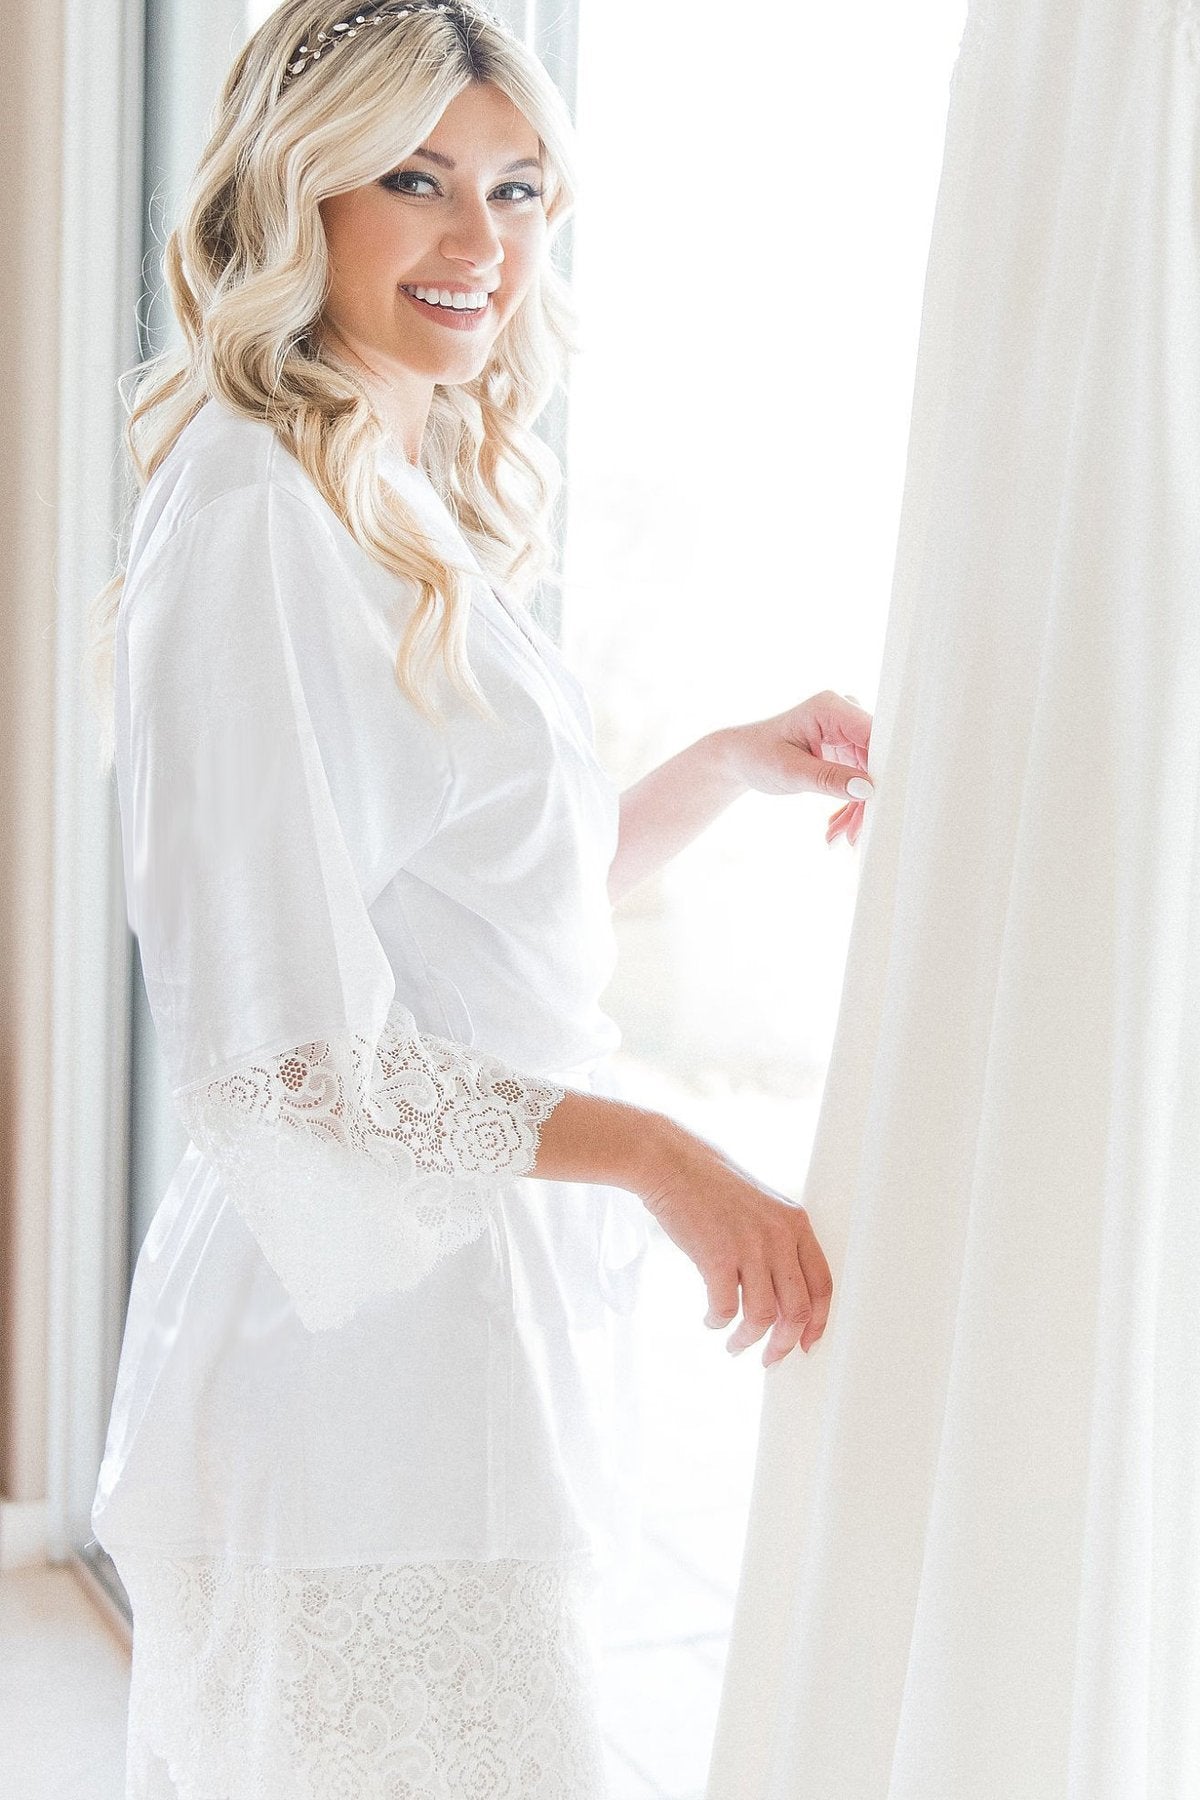 white bride robe